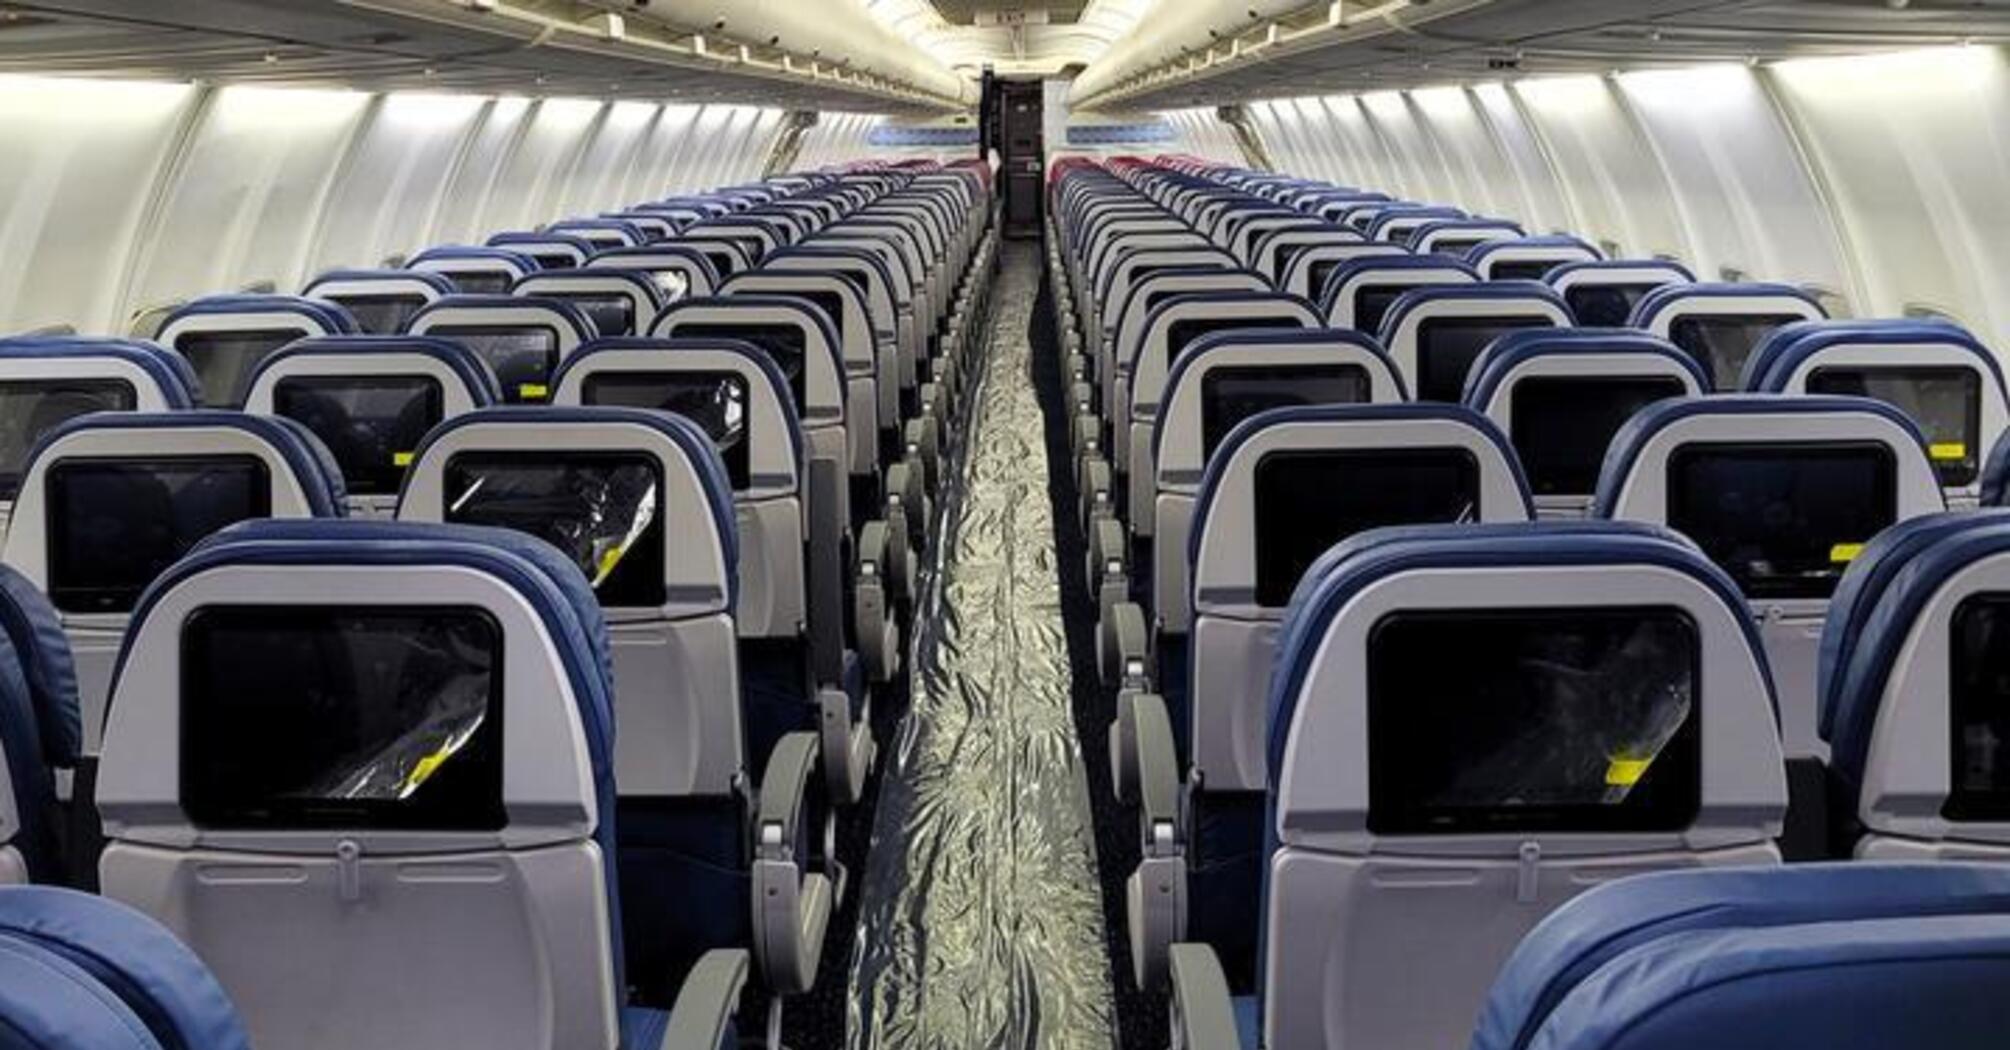 Delta cabin update: premium seats, 10-inch screens on seatbacks and more